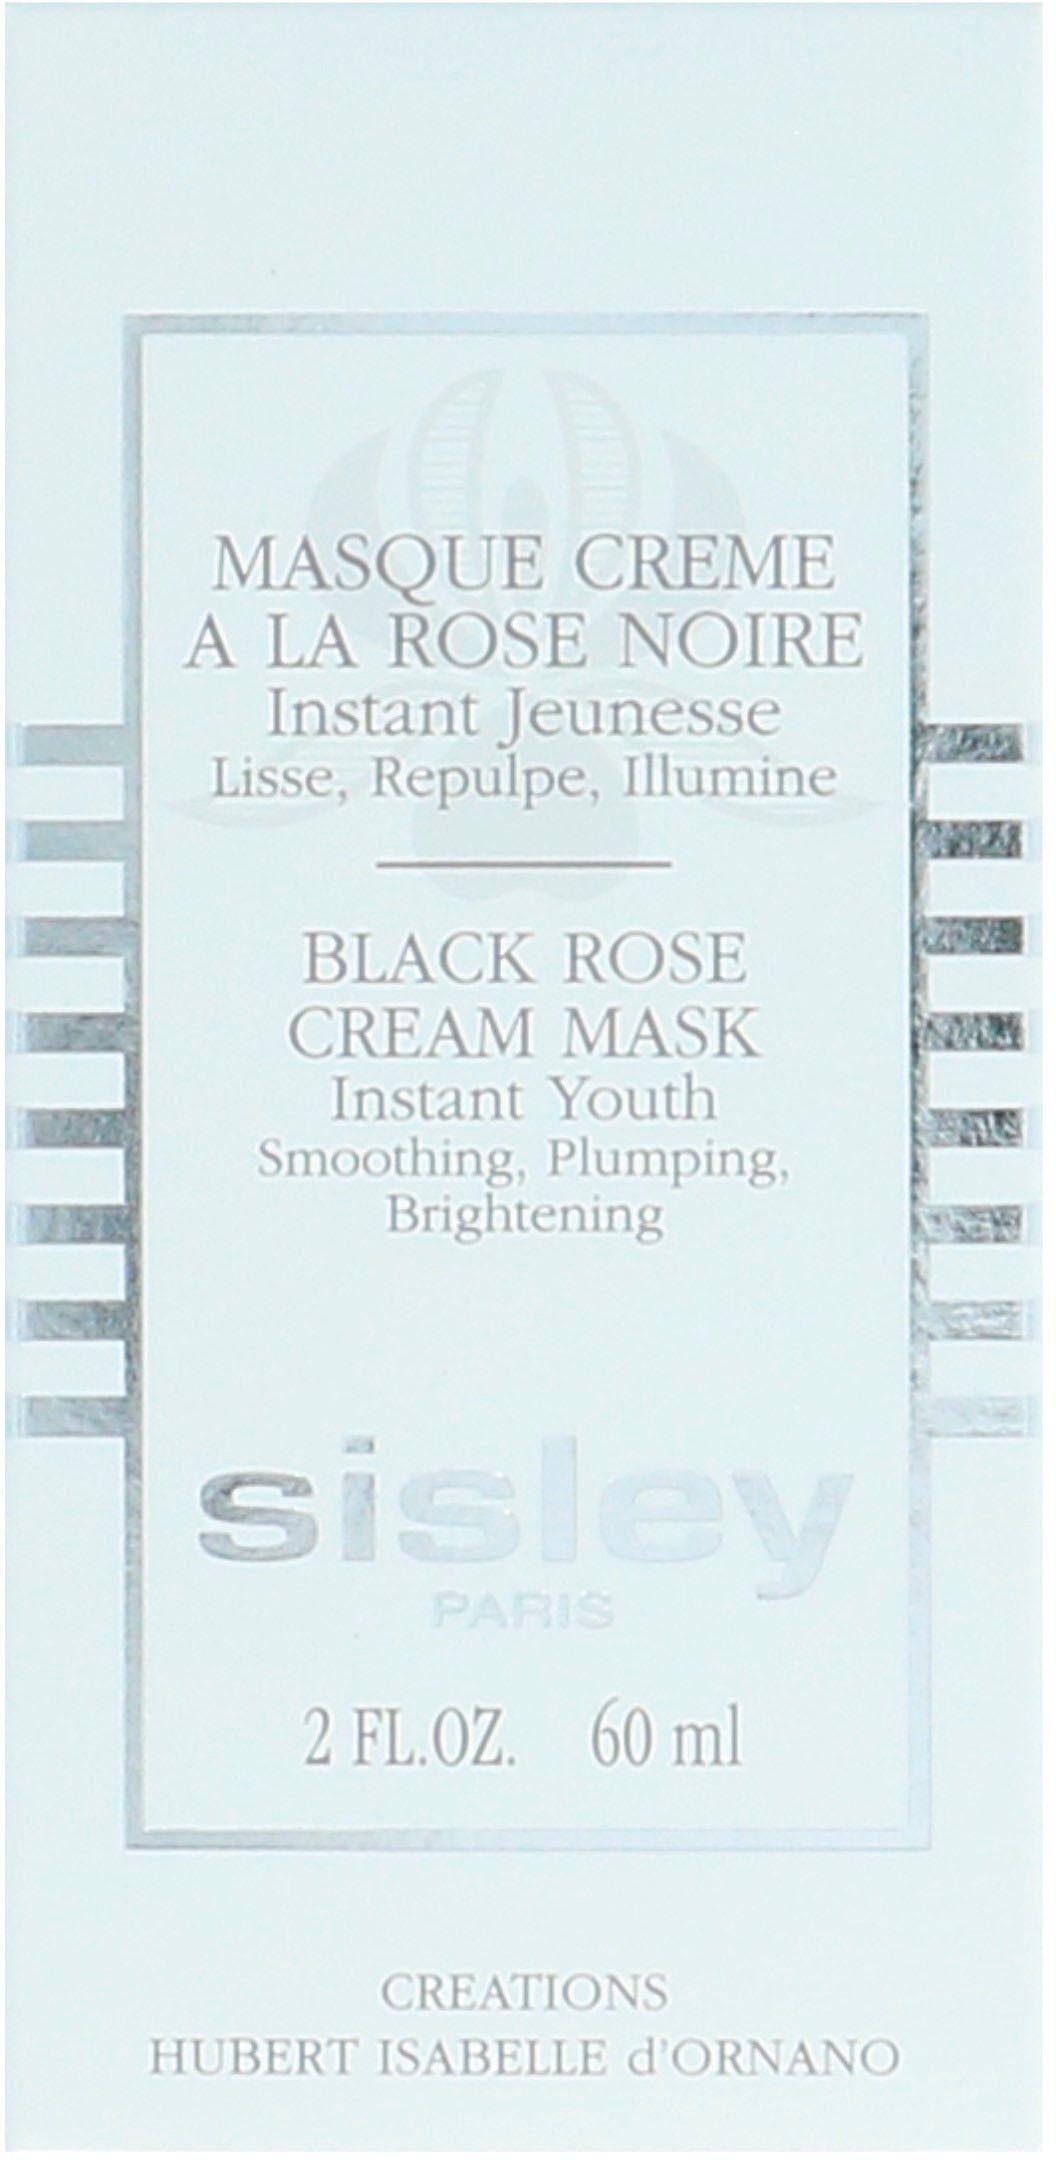 sisley Gesichtsmaske Black Mask Cream Rose